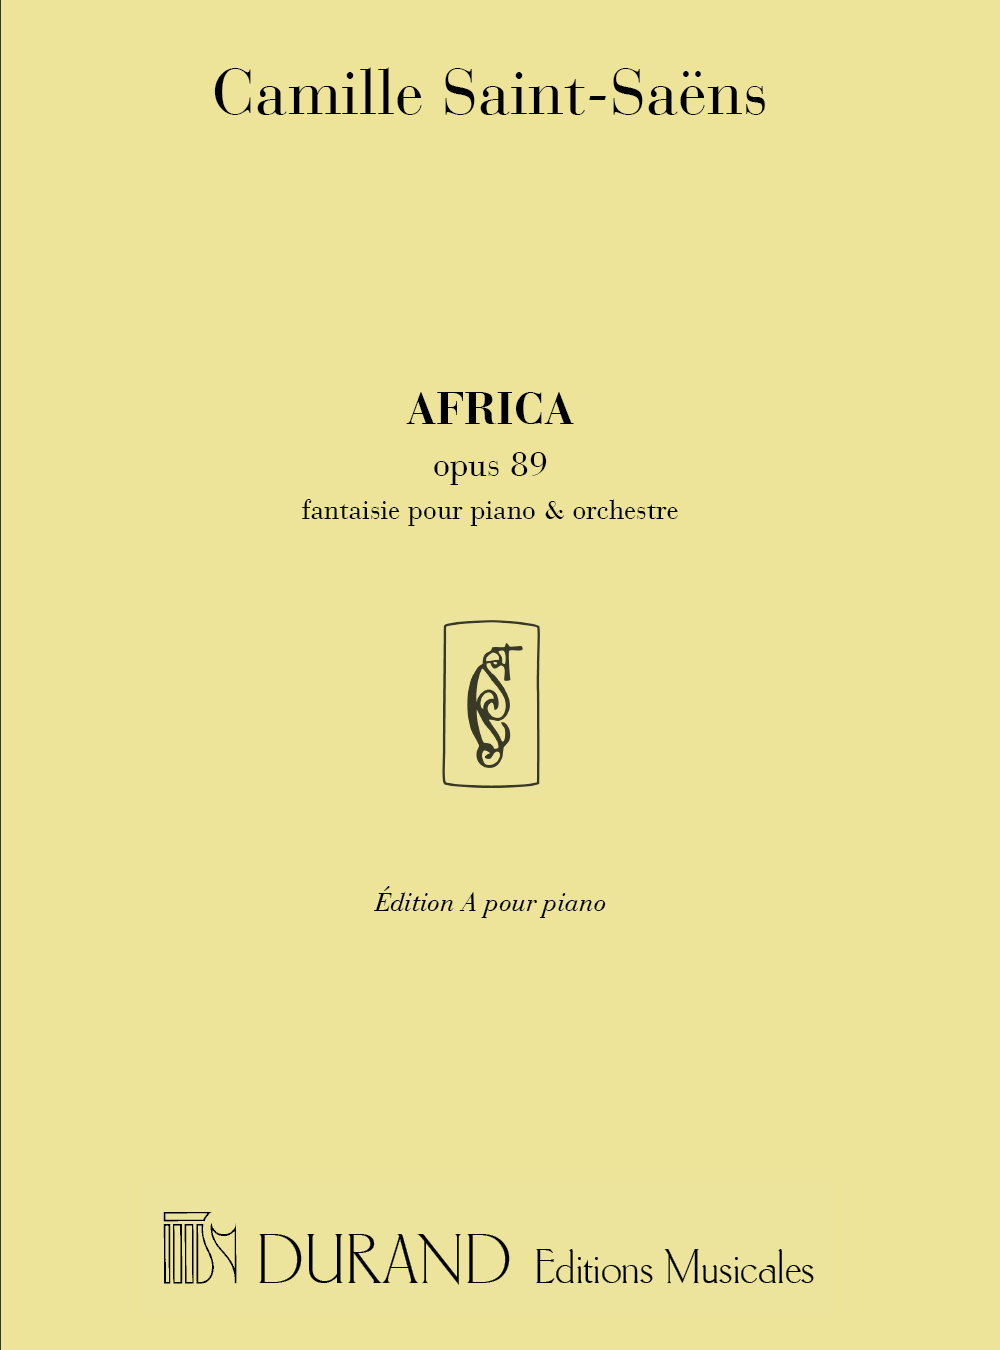 Camille Saint-Sans: Africa opus 89 fantaisie (edition A): Piano Solo: